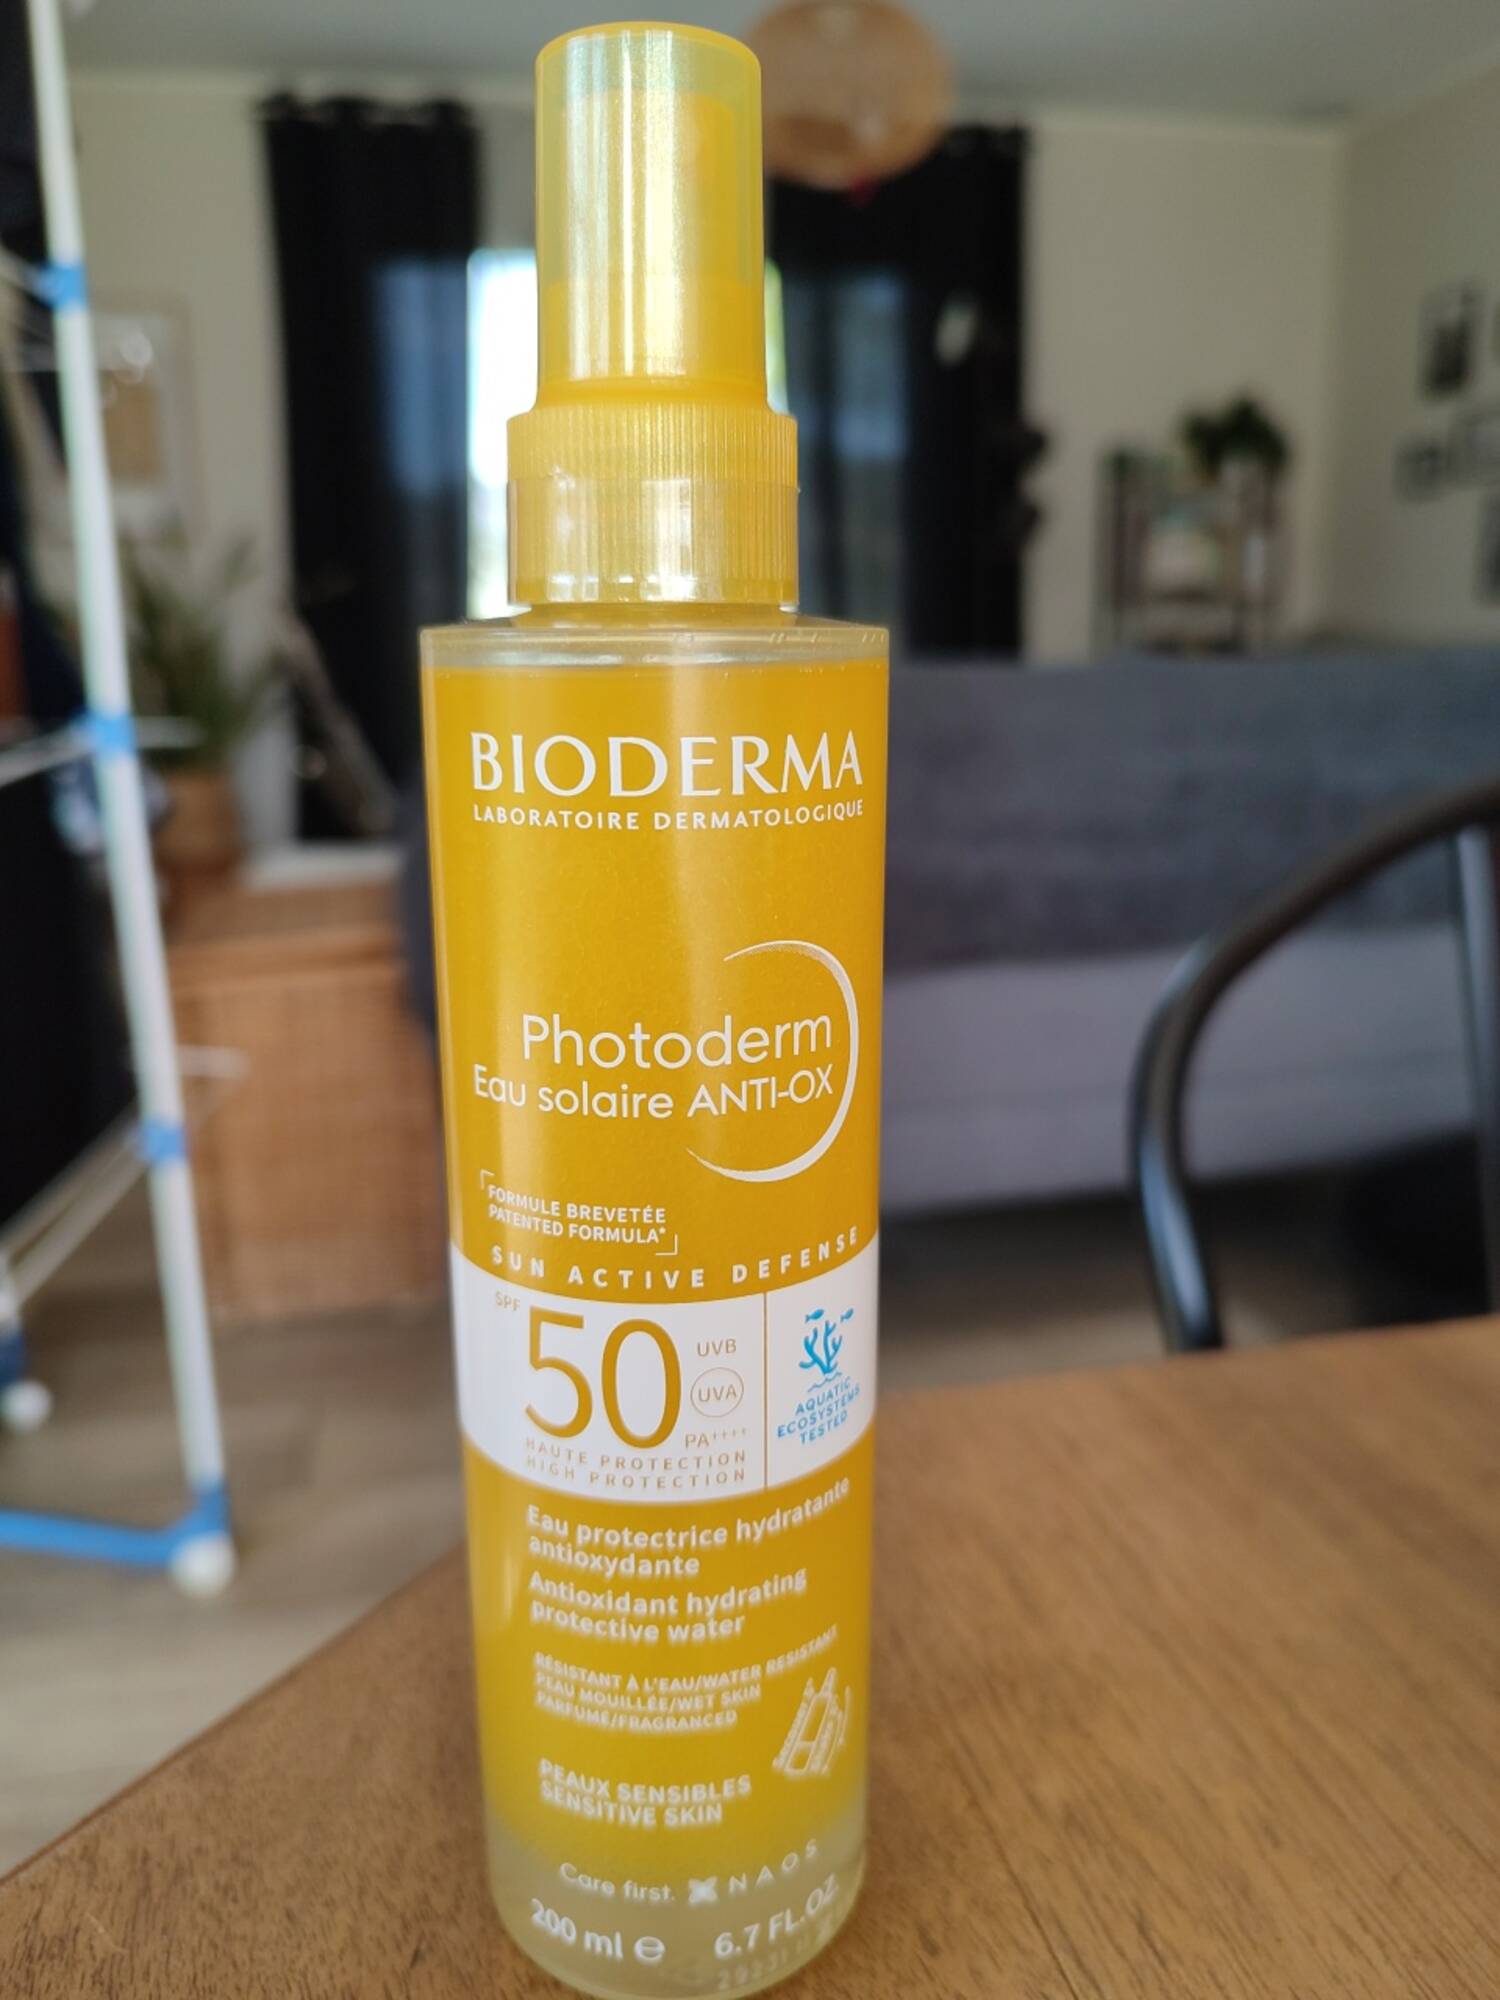 BIODERMA - Photoderm - Eau solaire anti-ox SPF 50